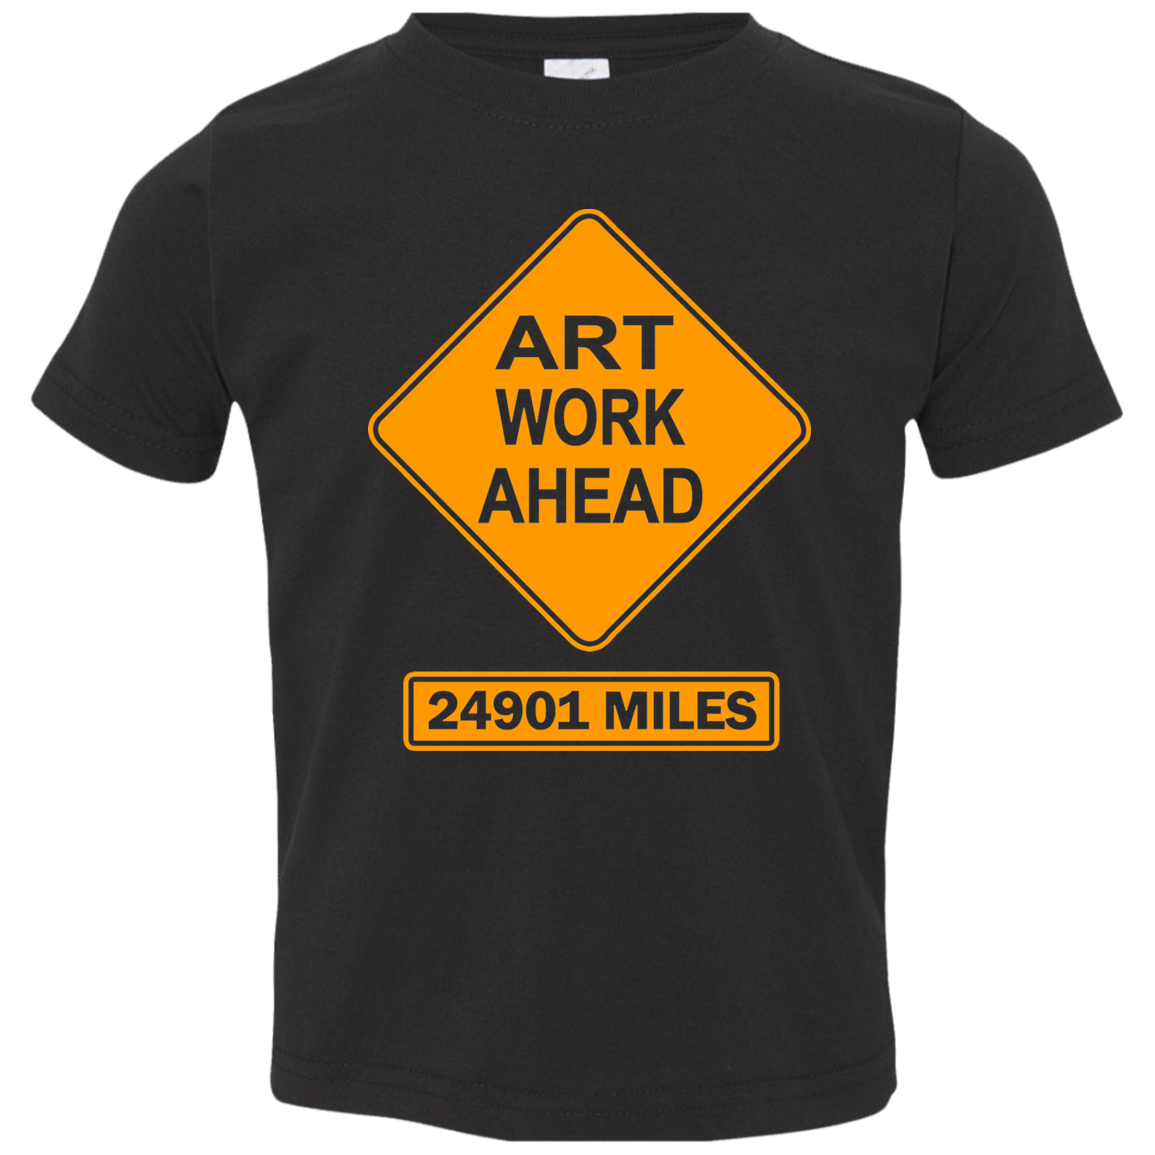 ArtichokeUSA Custom Design. Art Work Ahead. 24,901 Miles (Miles Around the Earth). Toddler Jersey T-Shirt